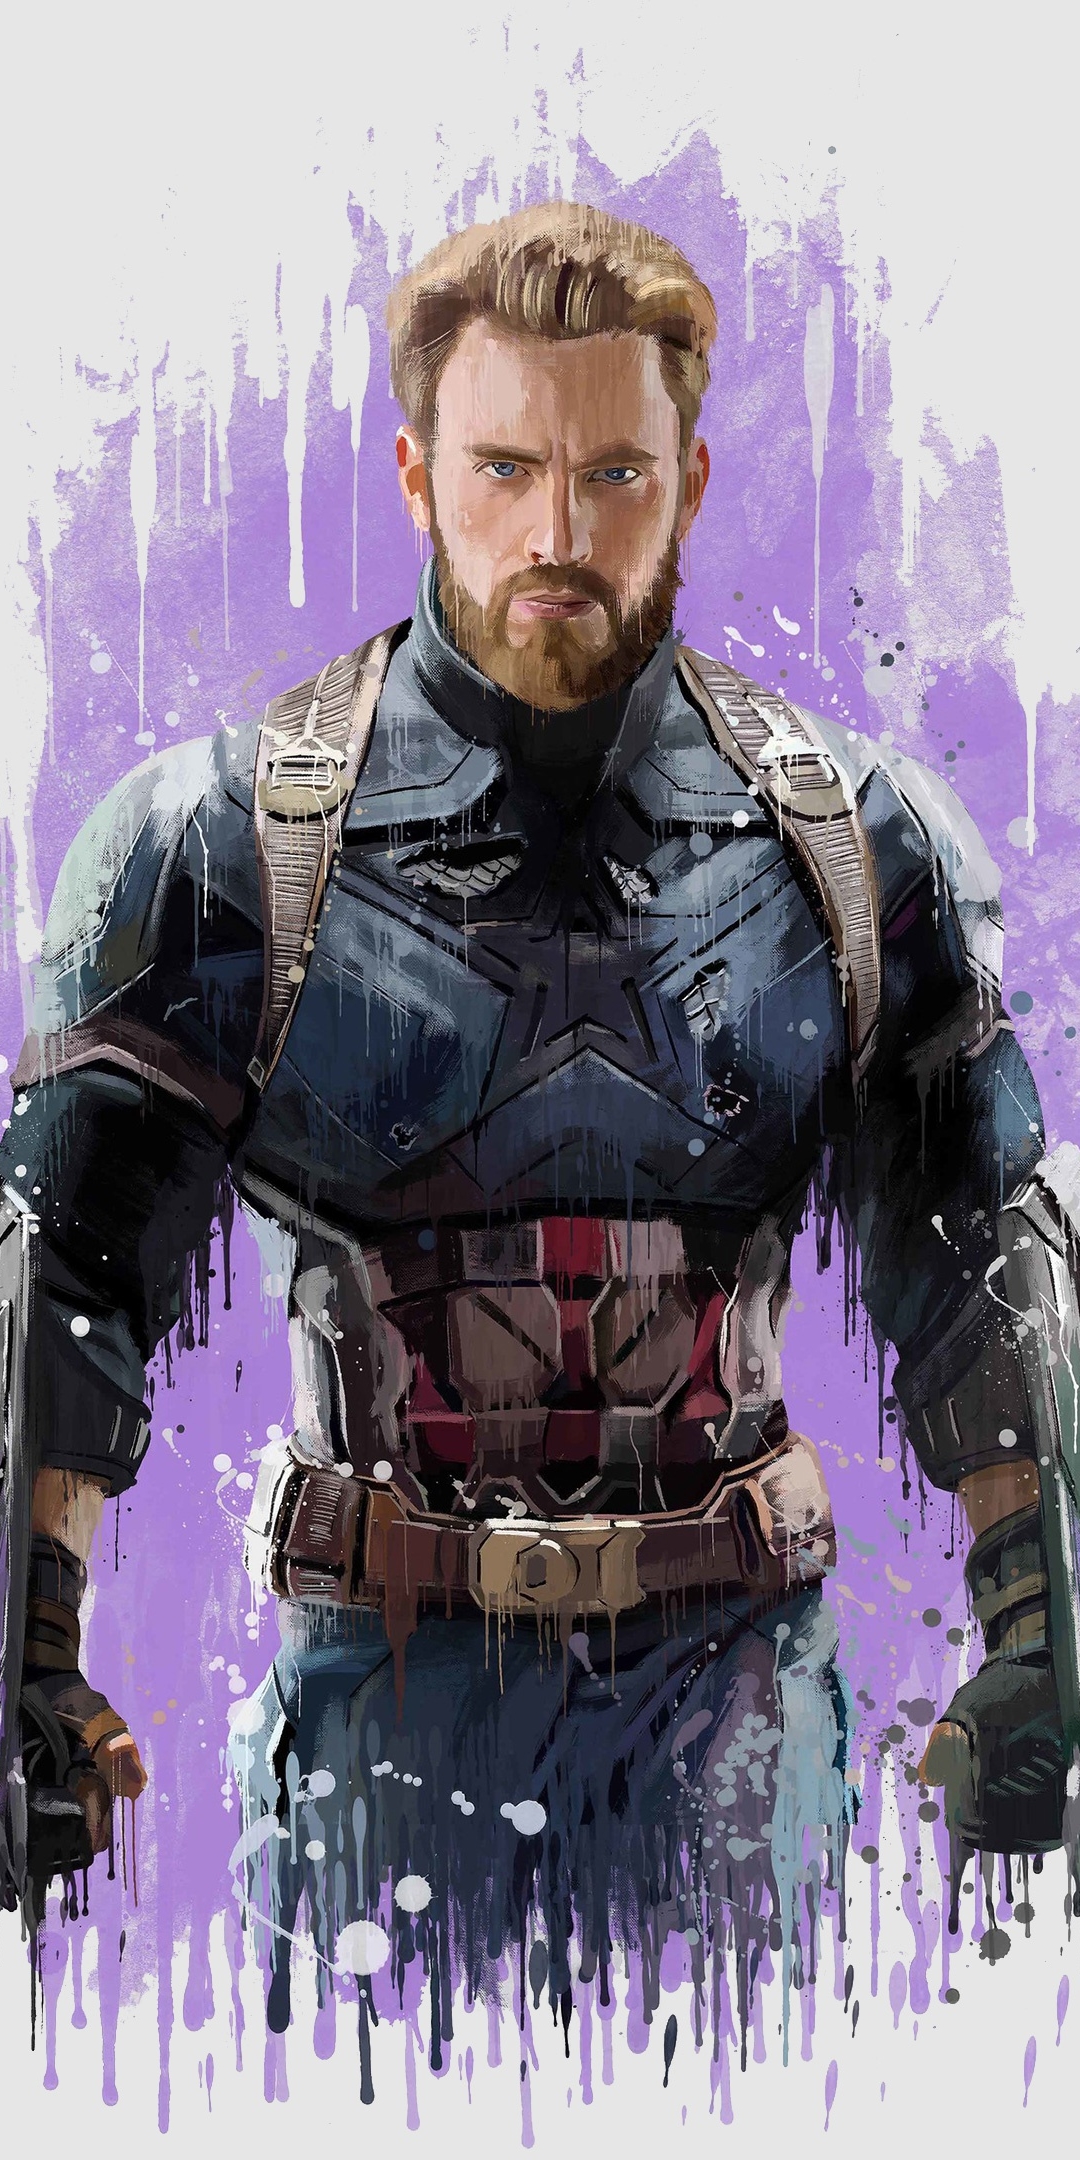 Avengers: Infinity War Phone Wallpaper - Mobile Abyss